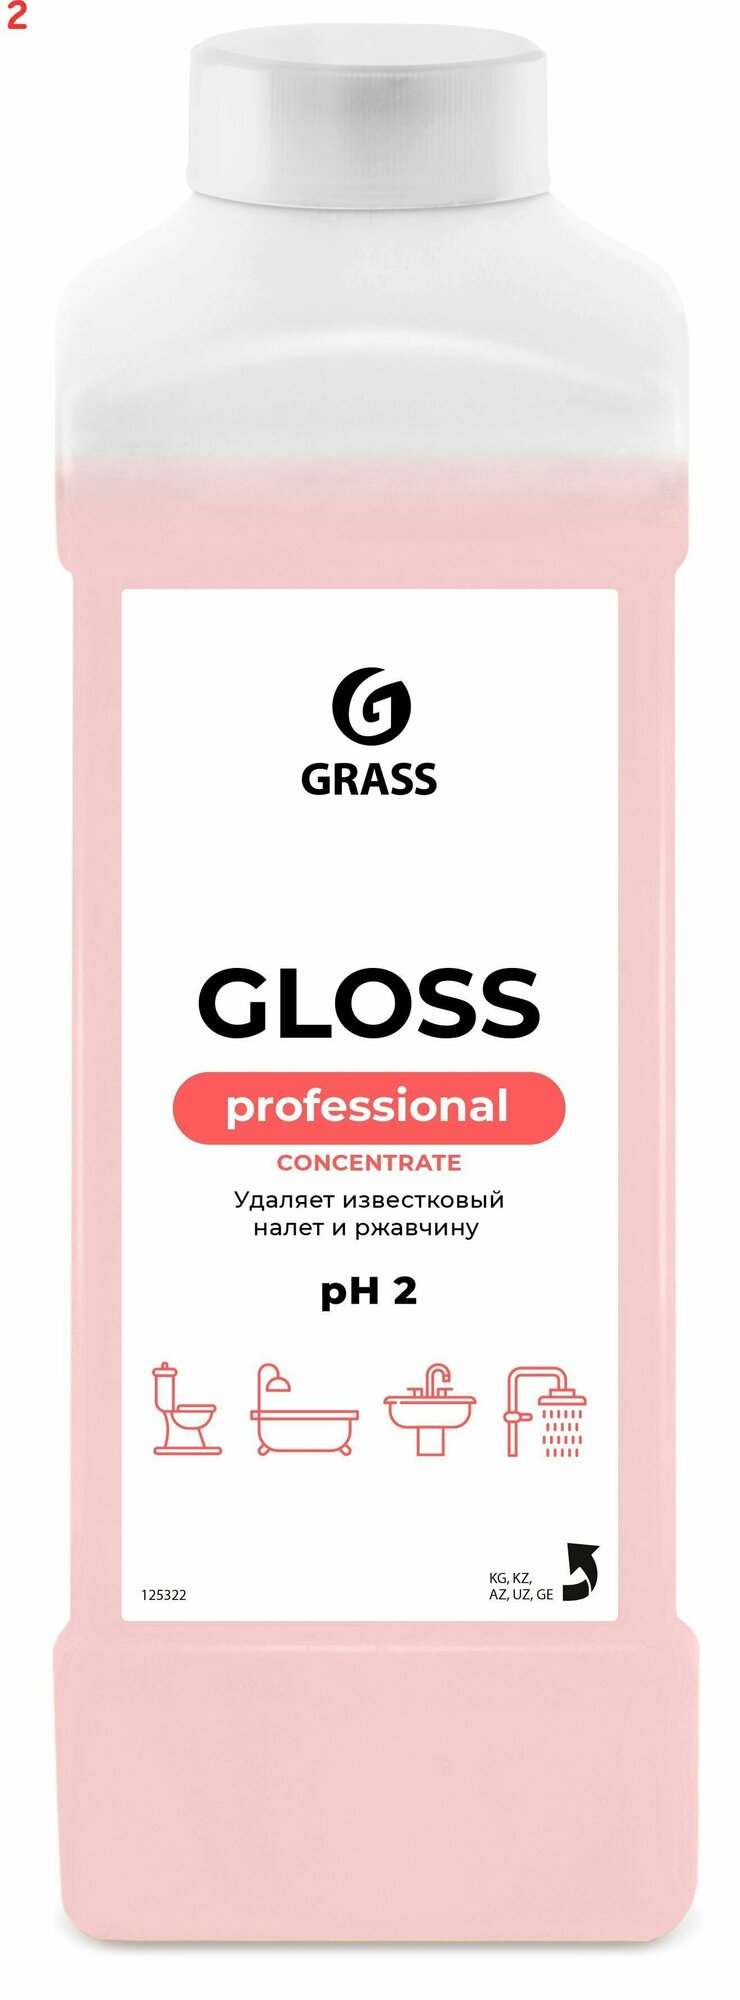 Grass концентрат Gloss Concentrate, 1 кг - фотография № 15